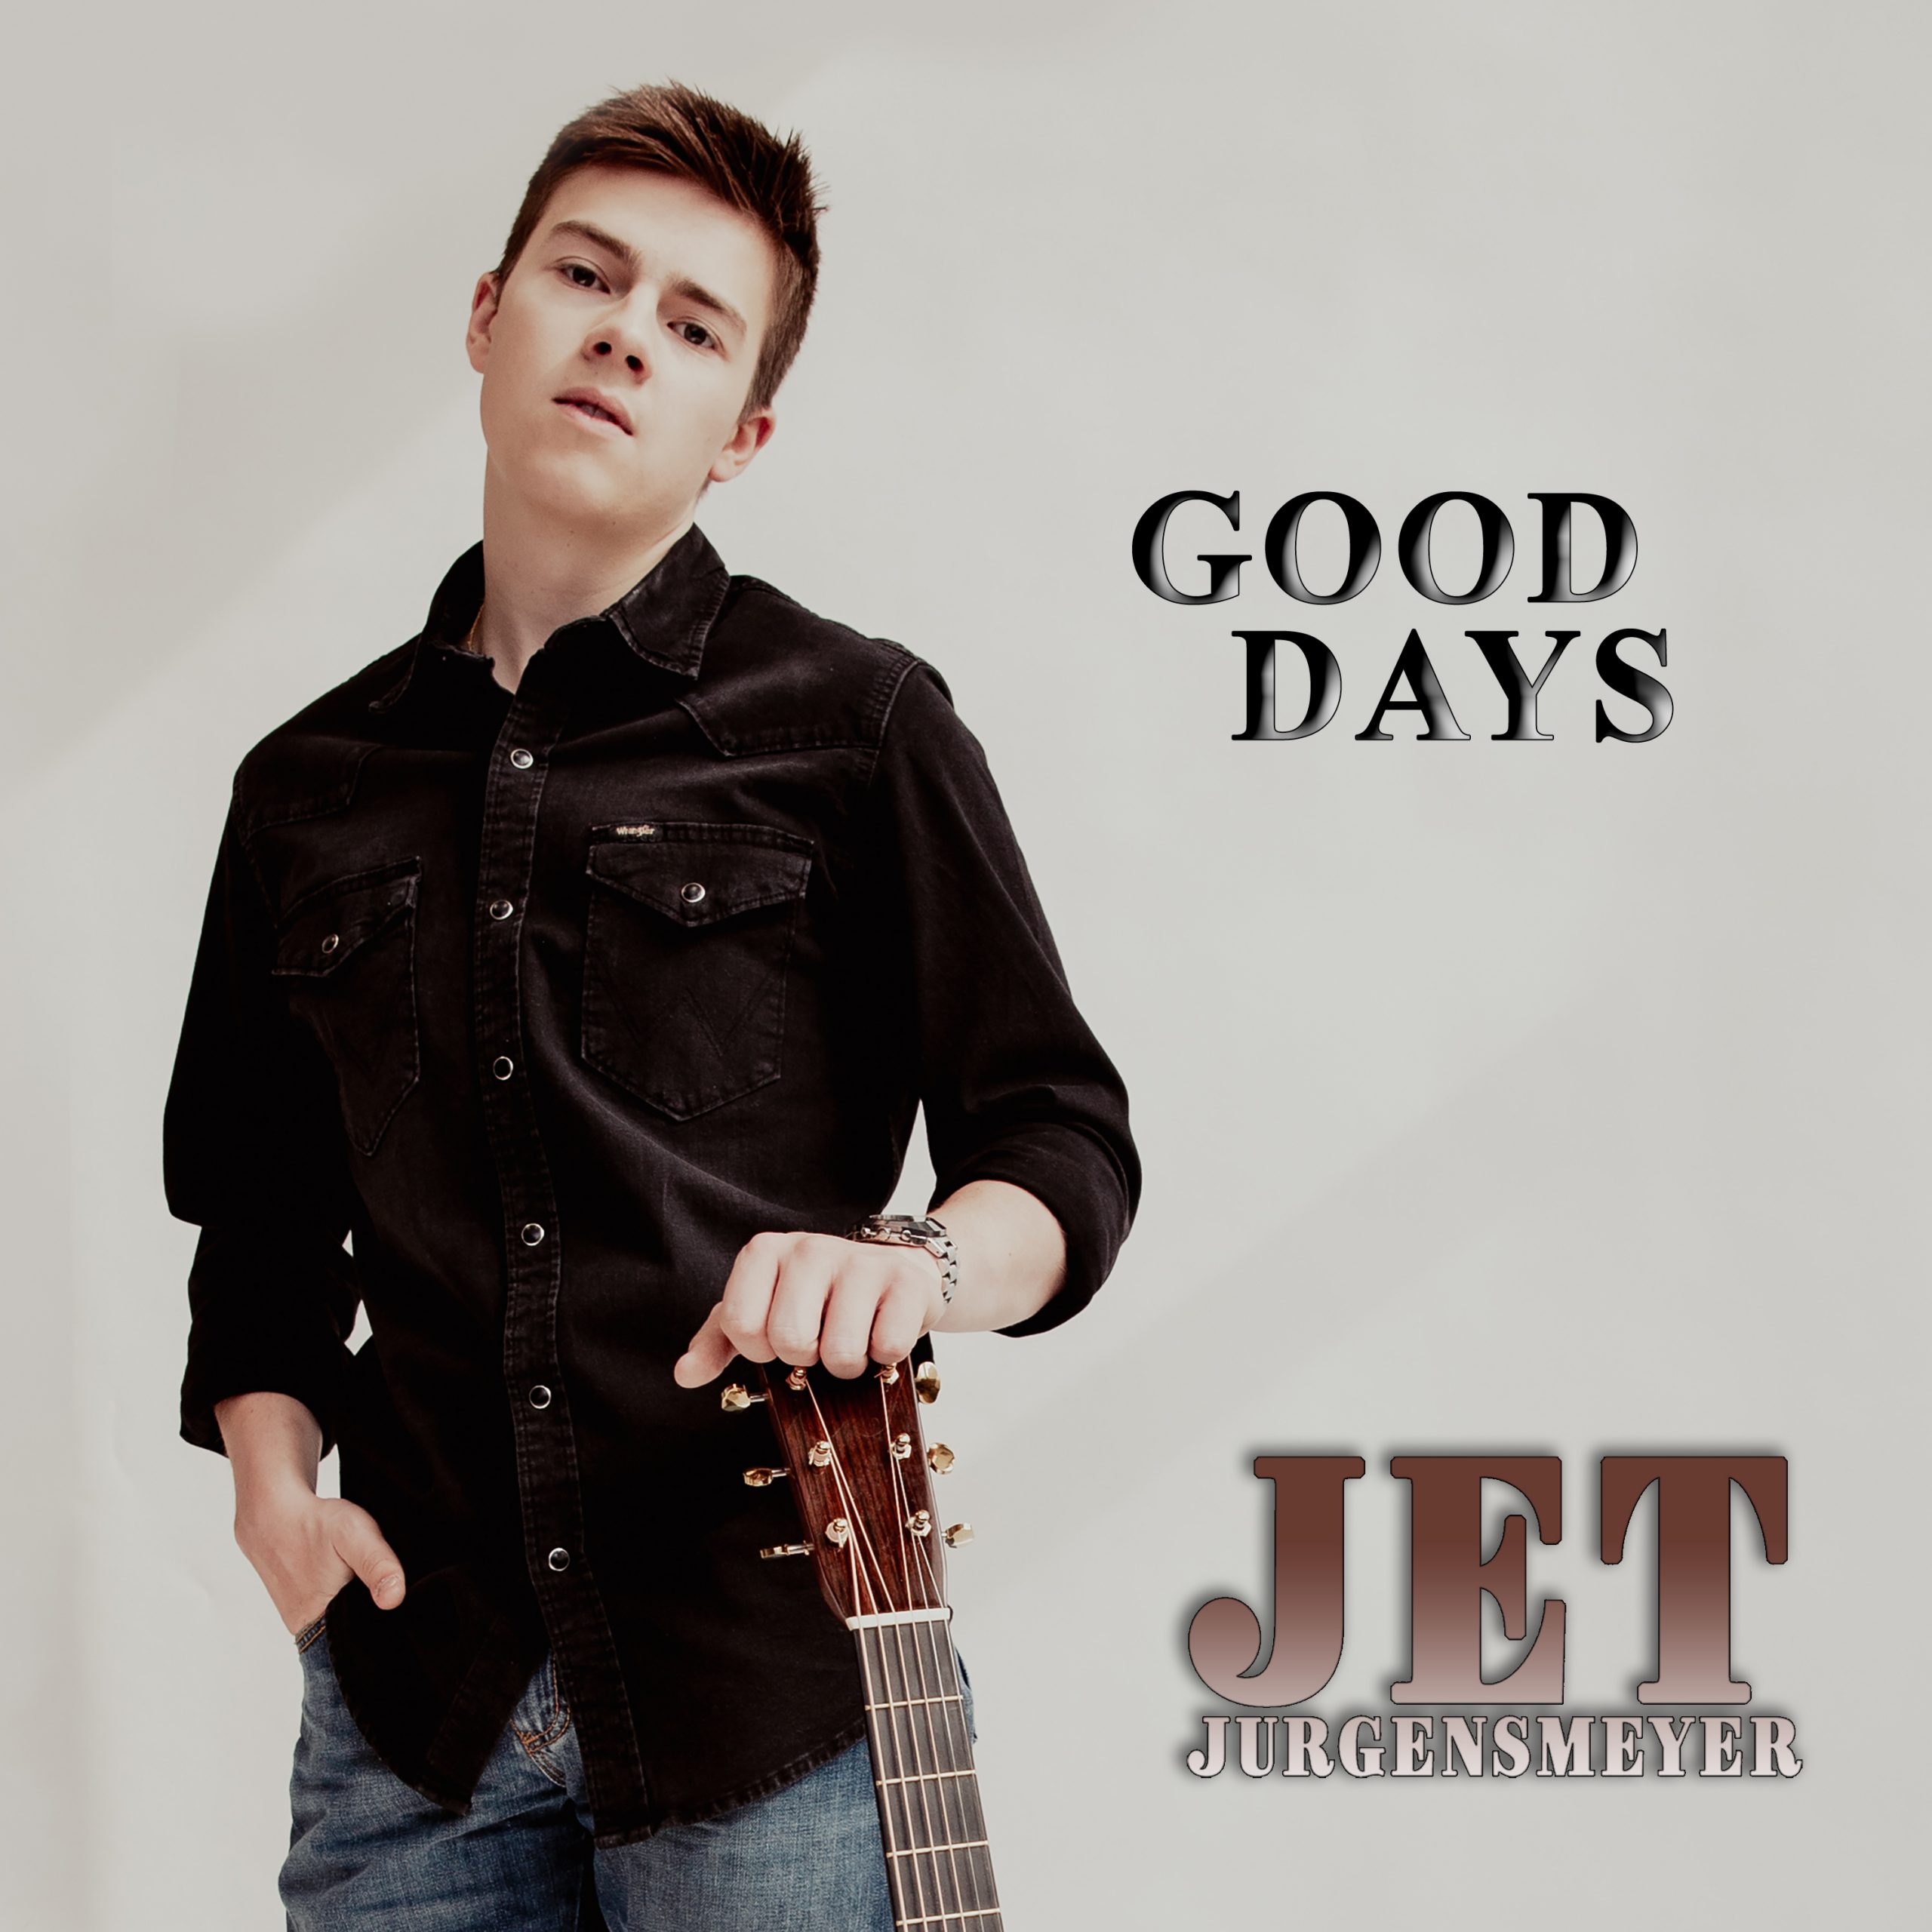 Jet Jurgensmeyer – Good Days